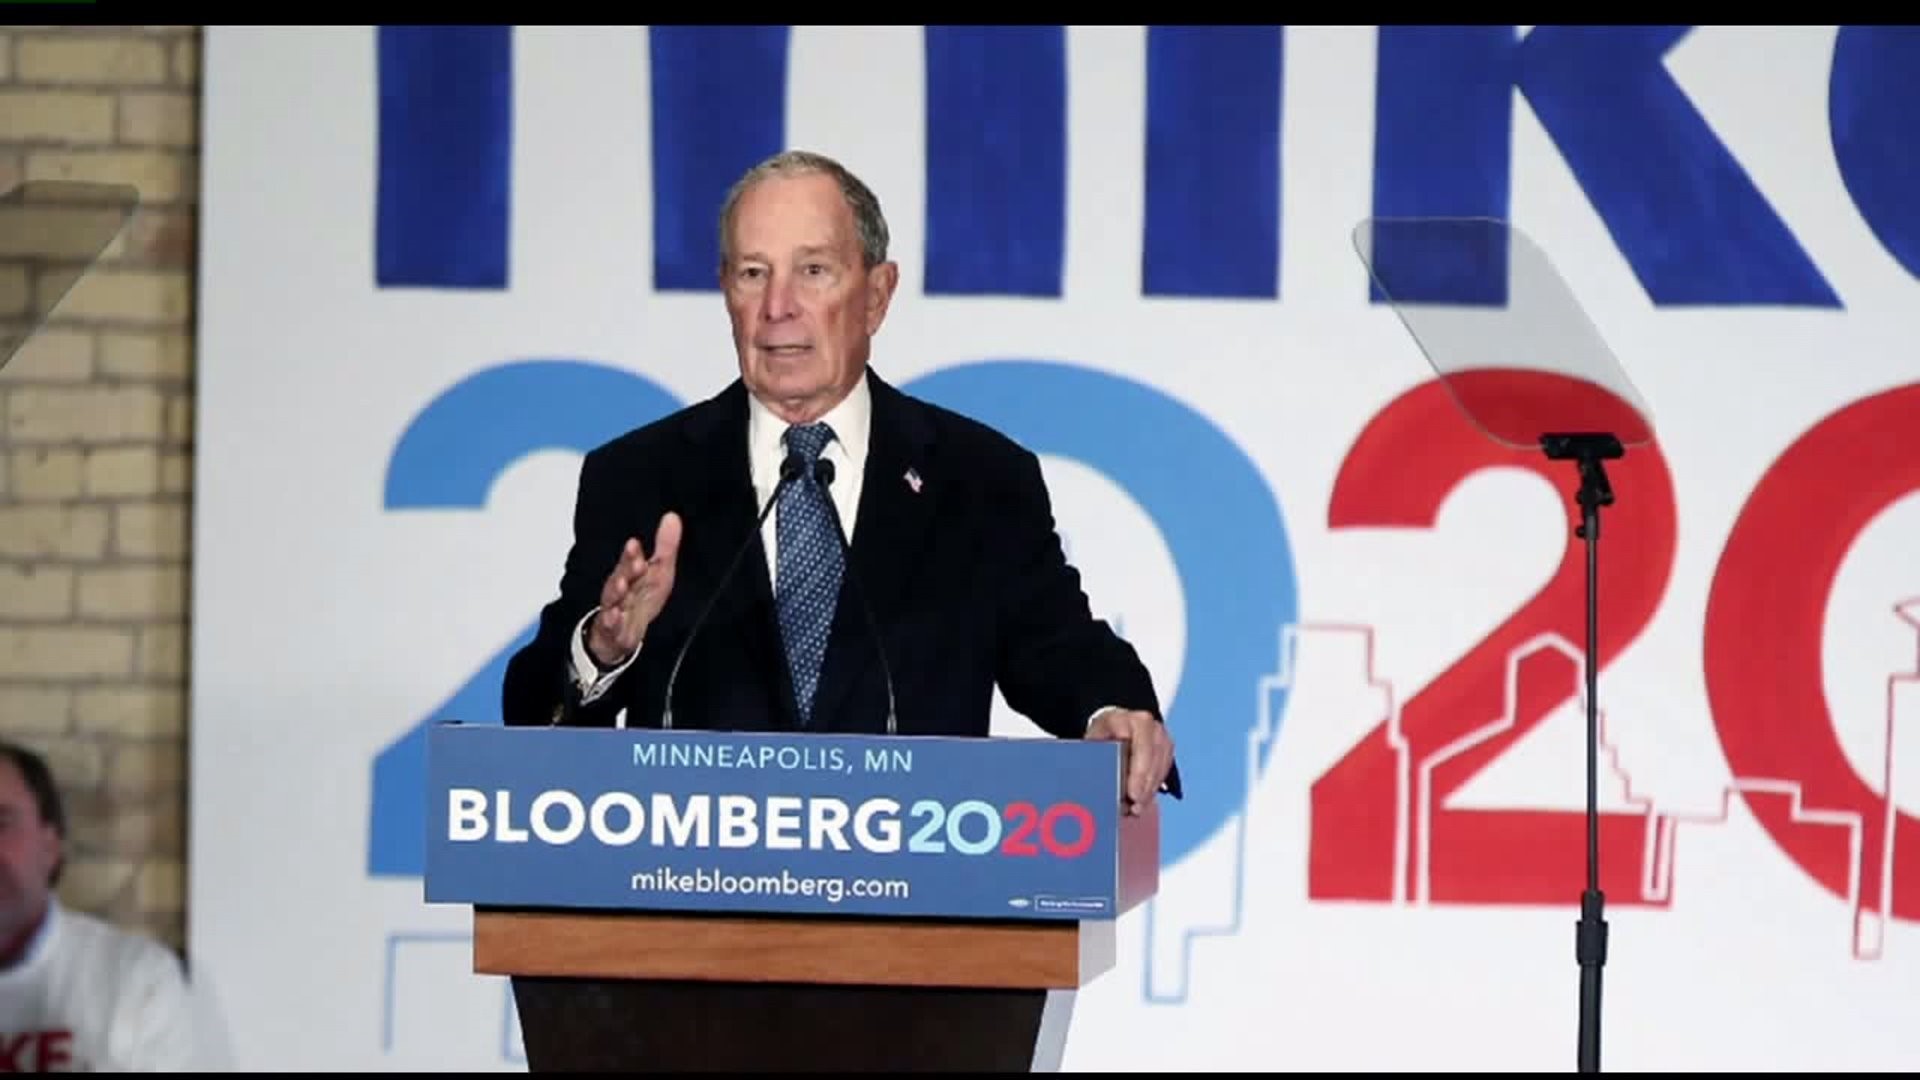 Bloomberg advocates targeting minorities